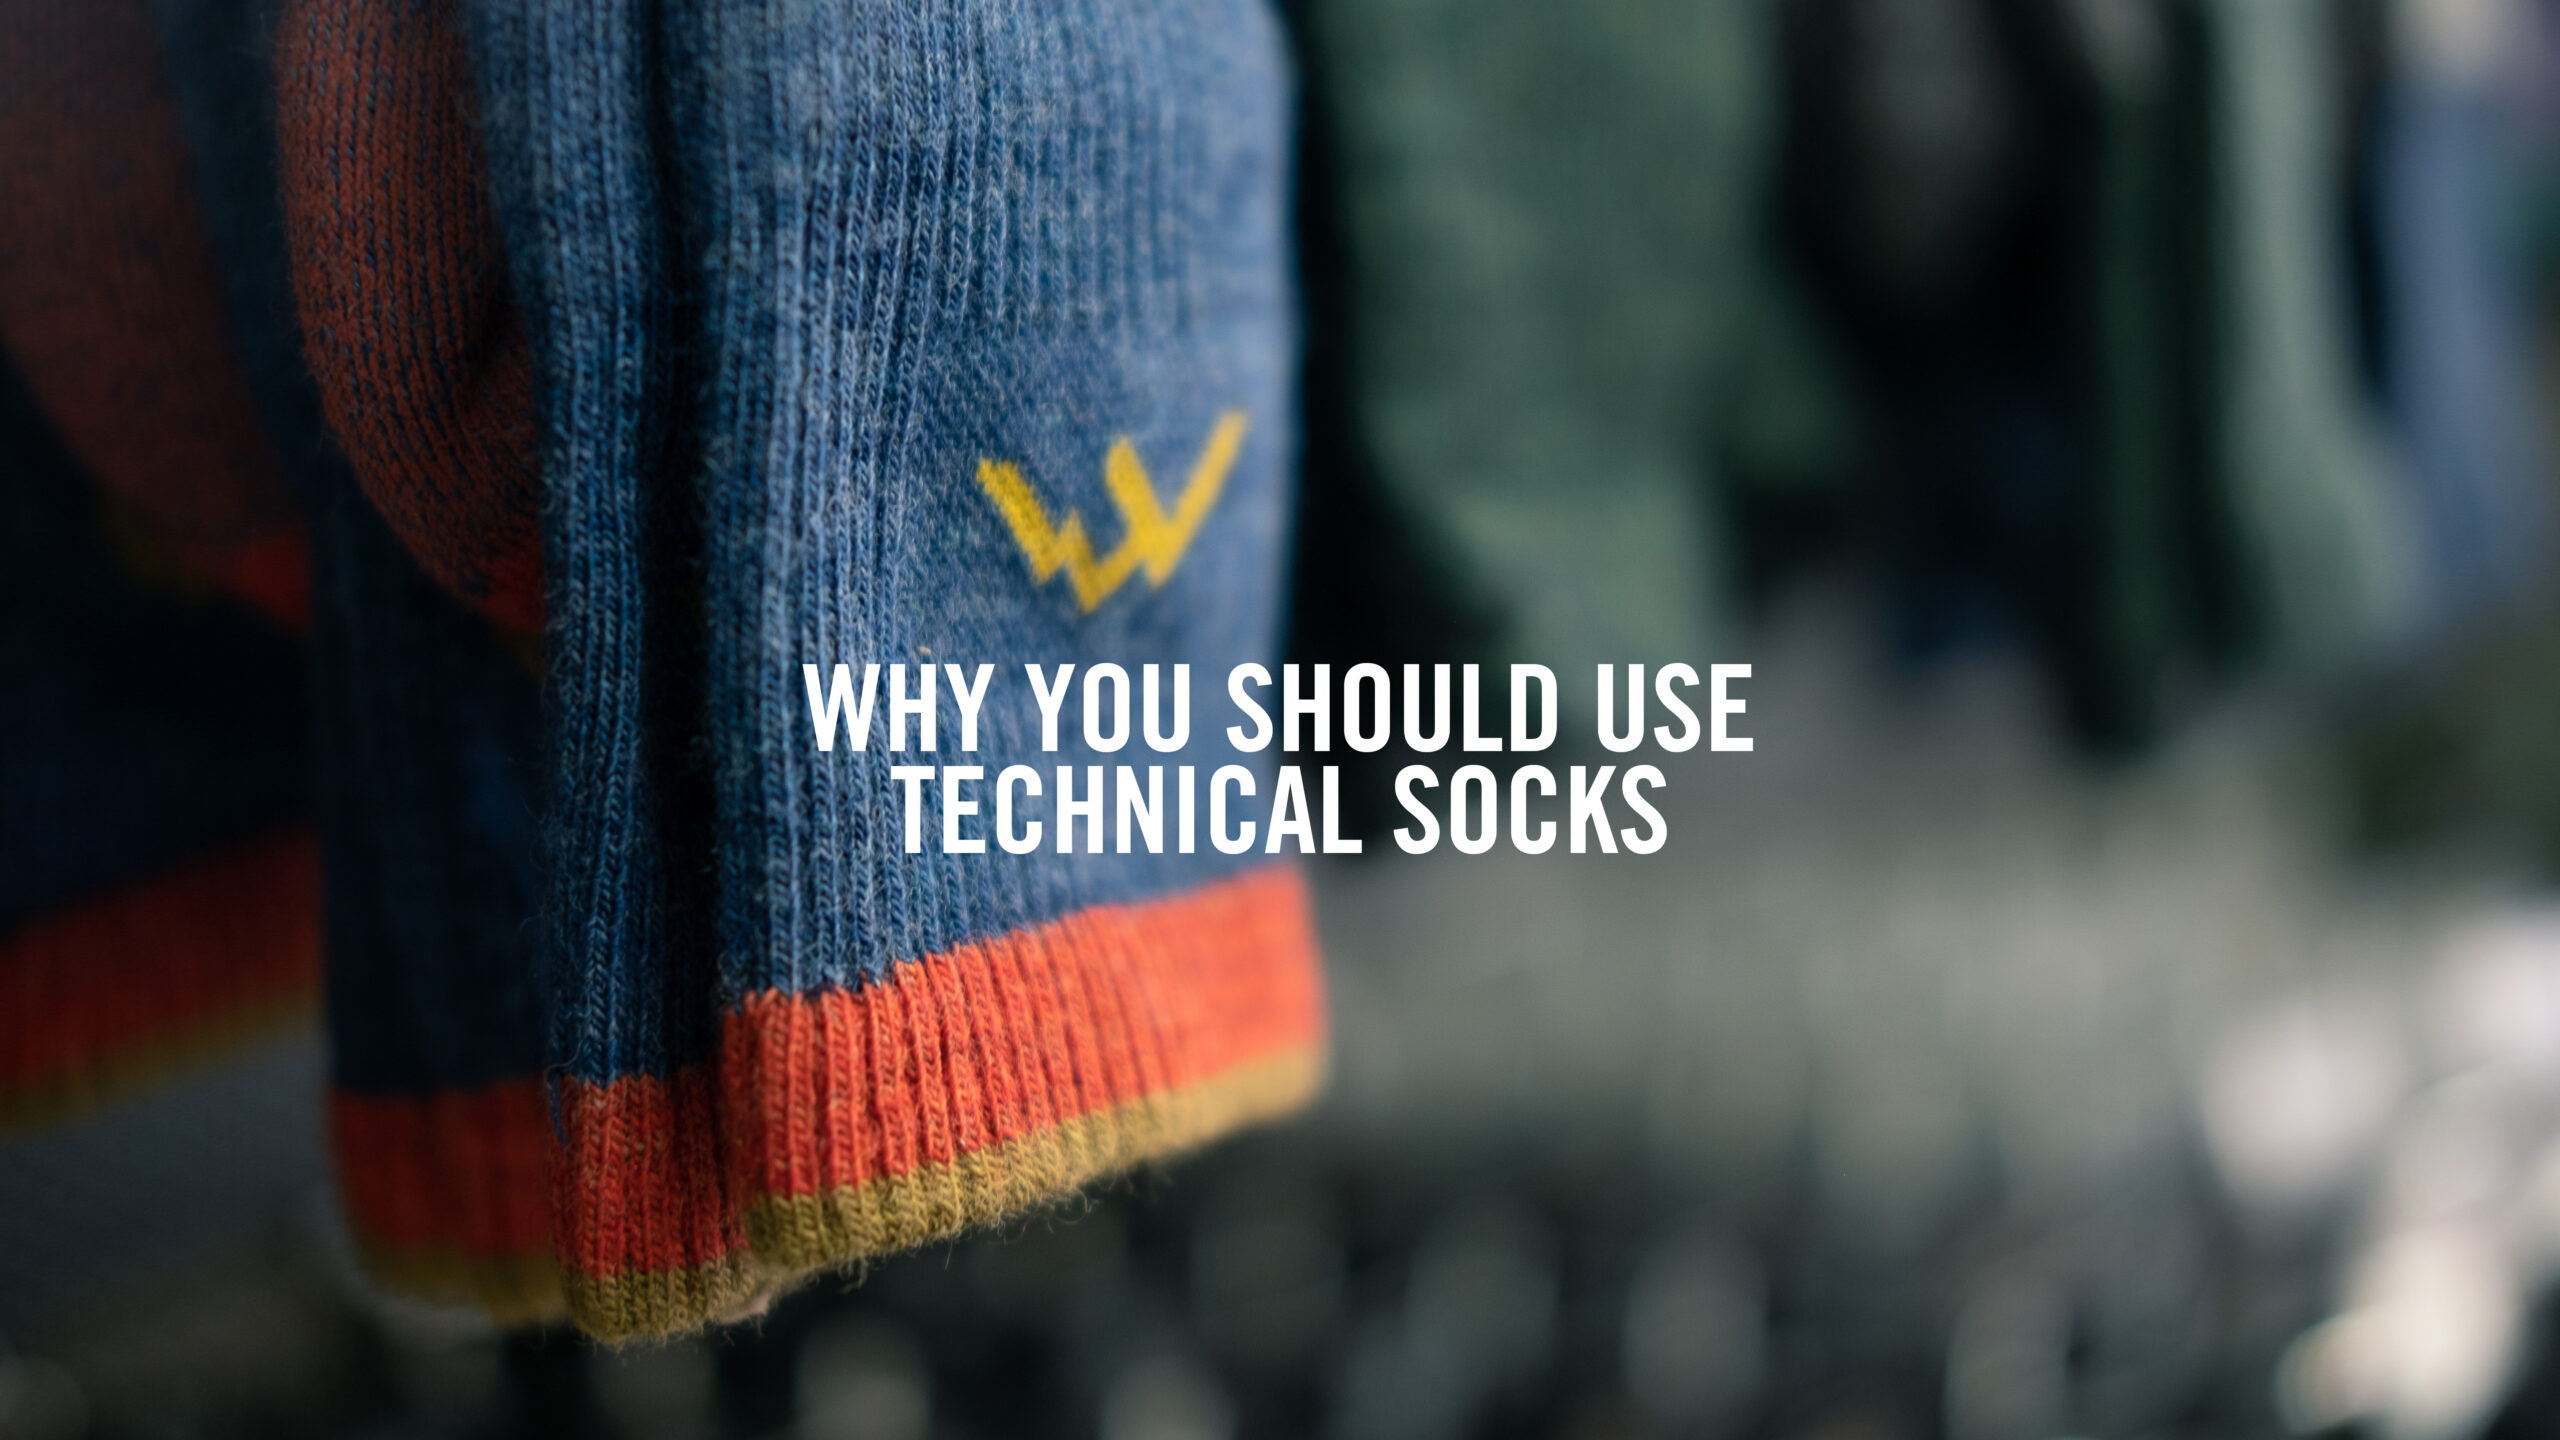 Why Use Technical Socks?